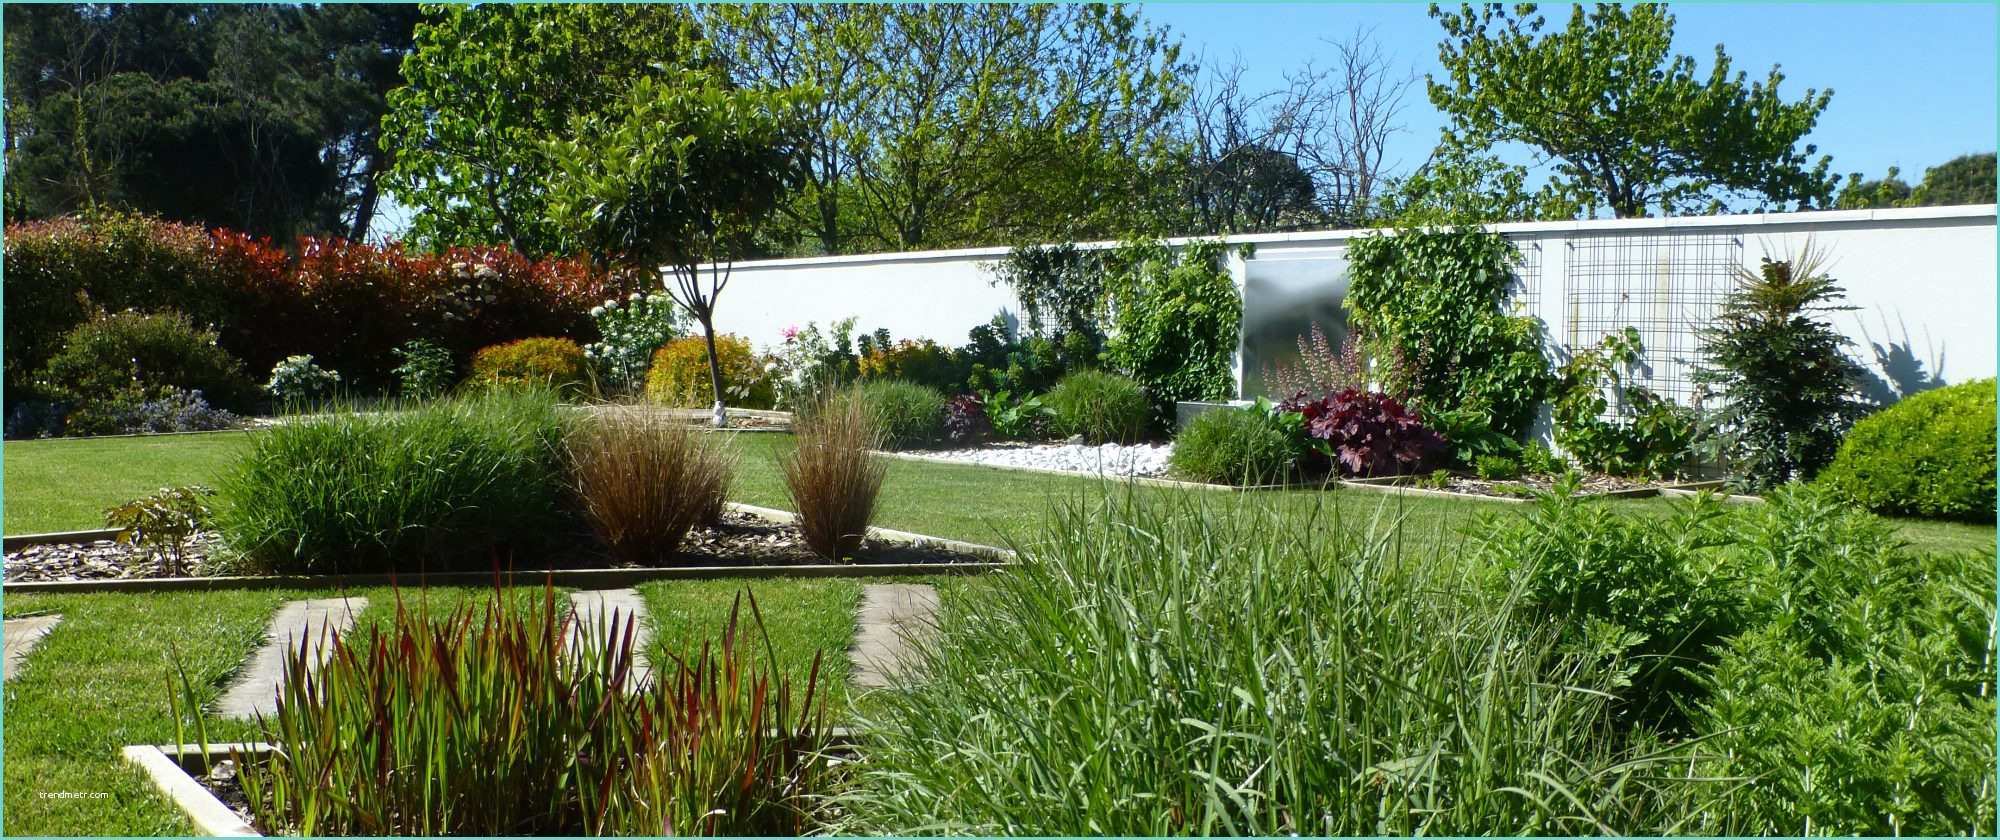 Cration Jardin Sur Mesure Grenoble Paysagiste Paysagiste Gironde